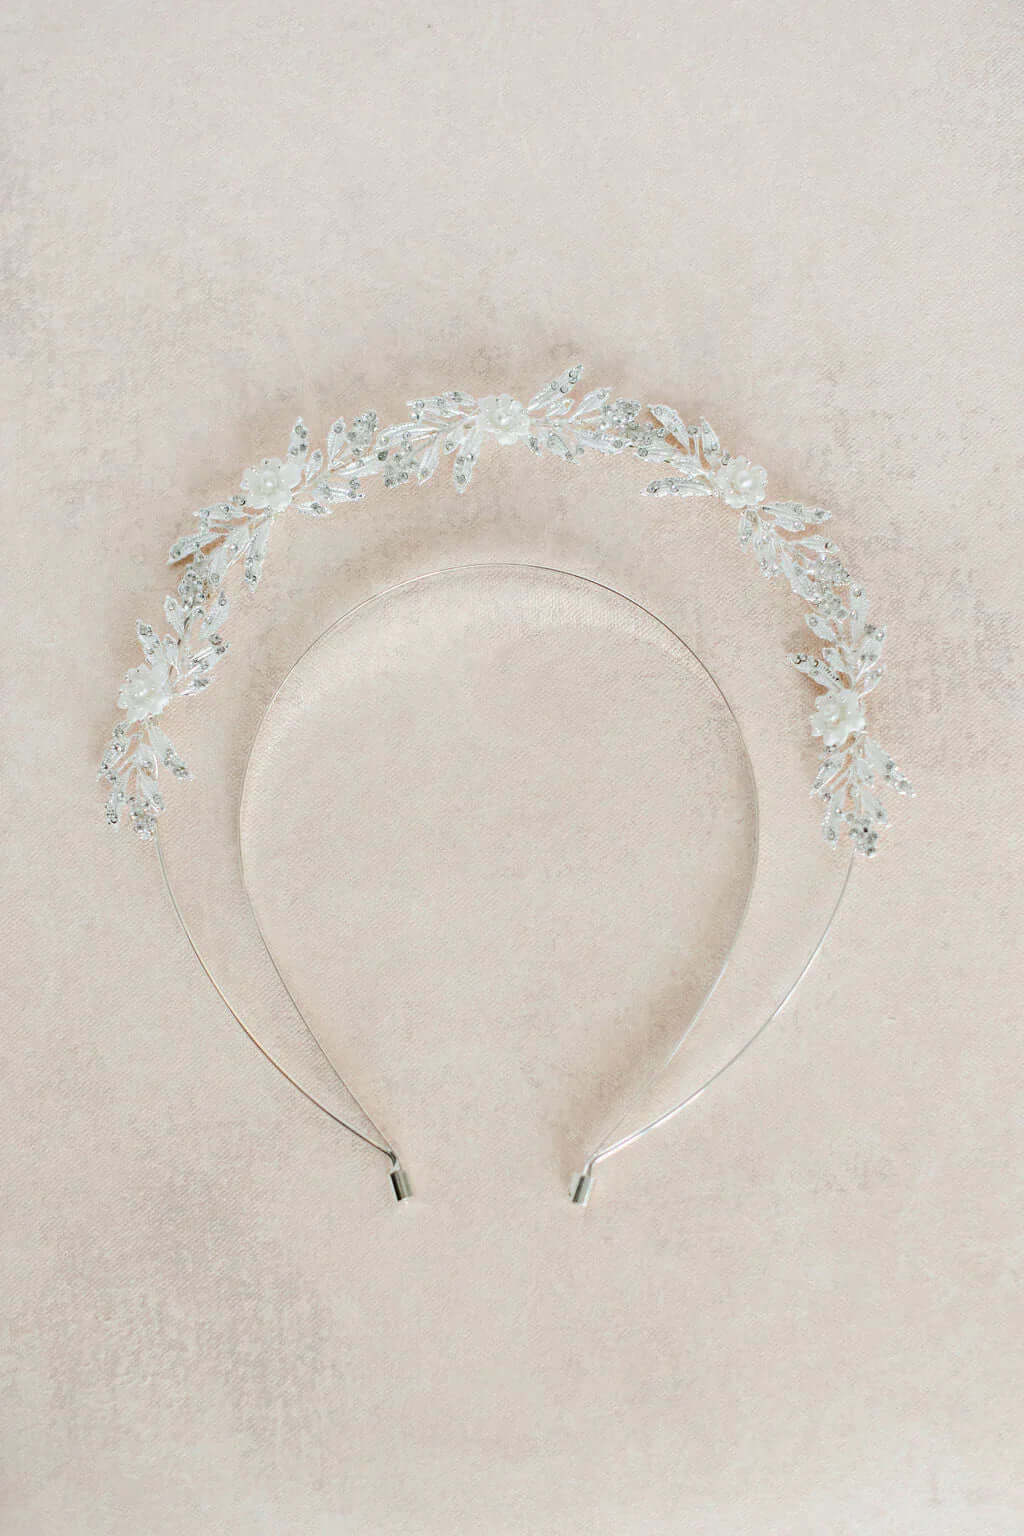 10 unique wedding headpieces for the non-traditional bride Tessa Kim